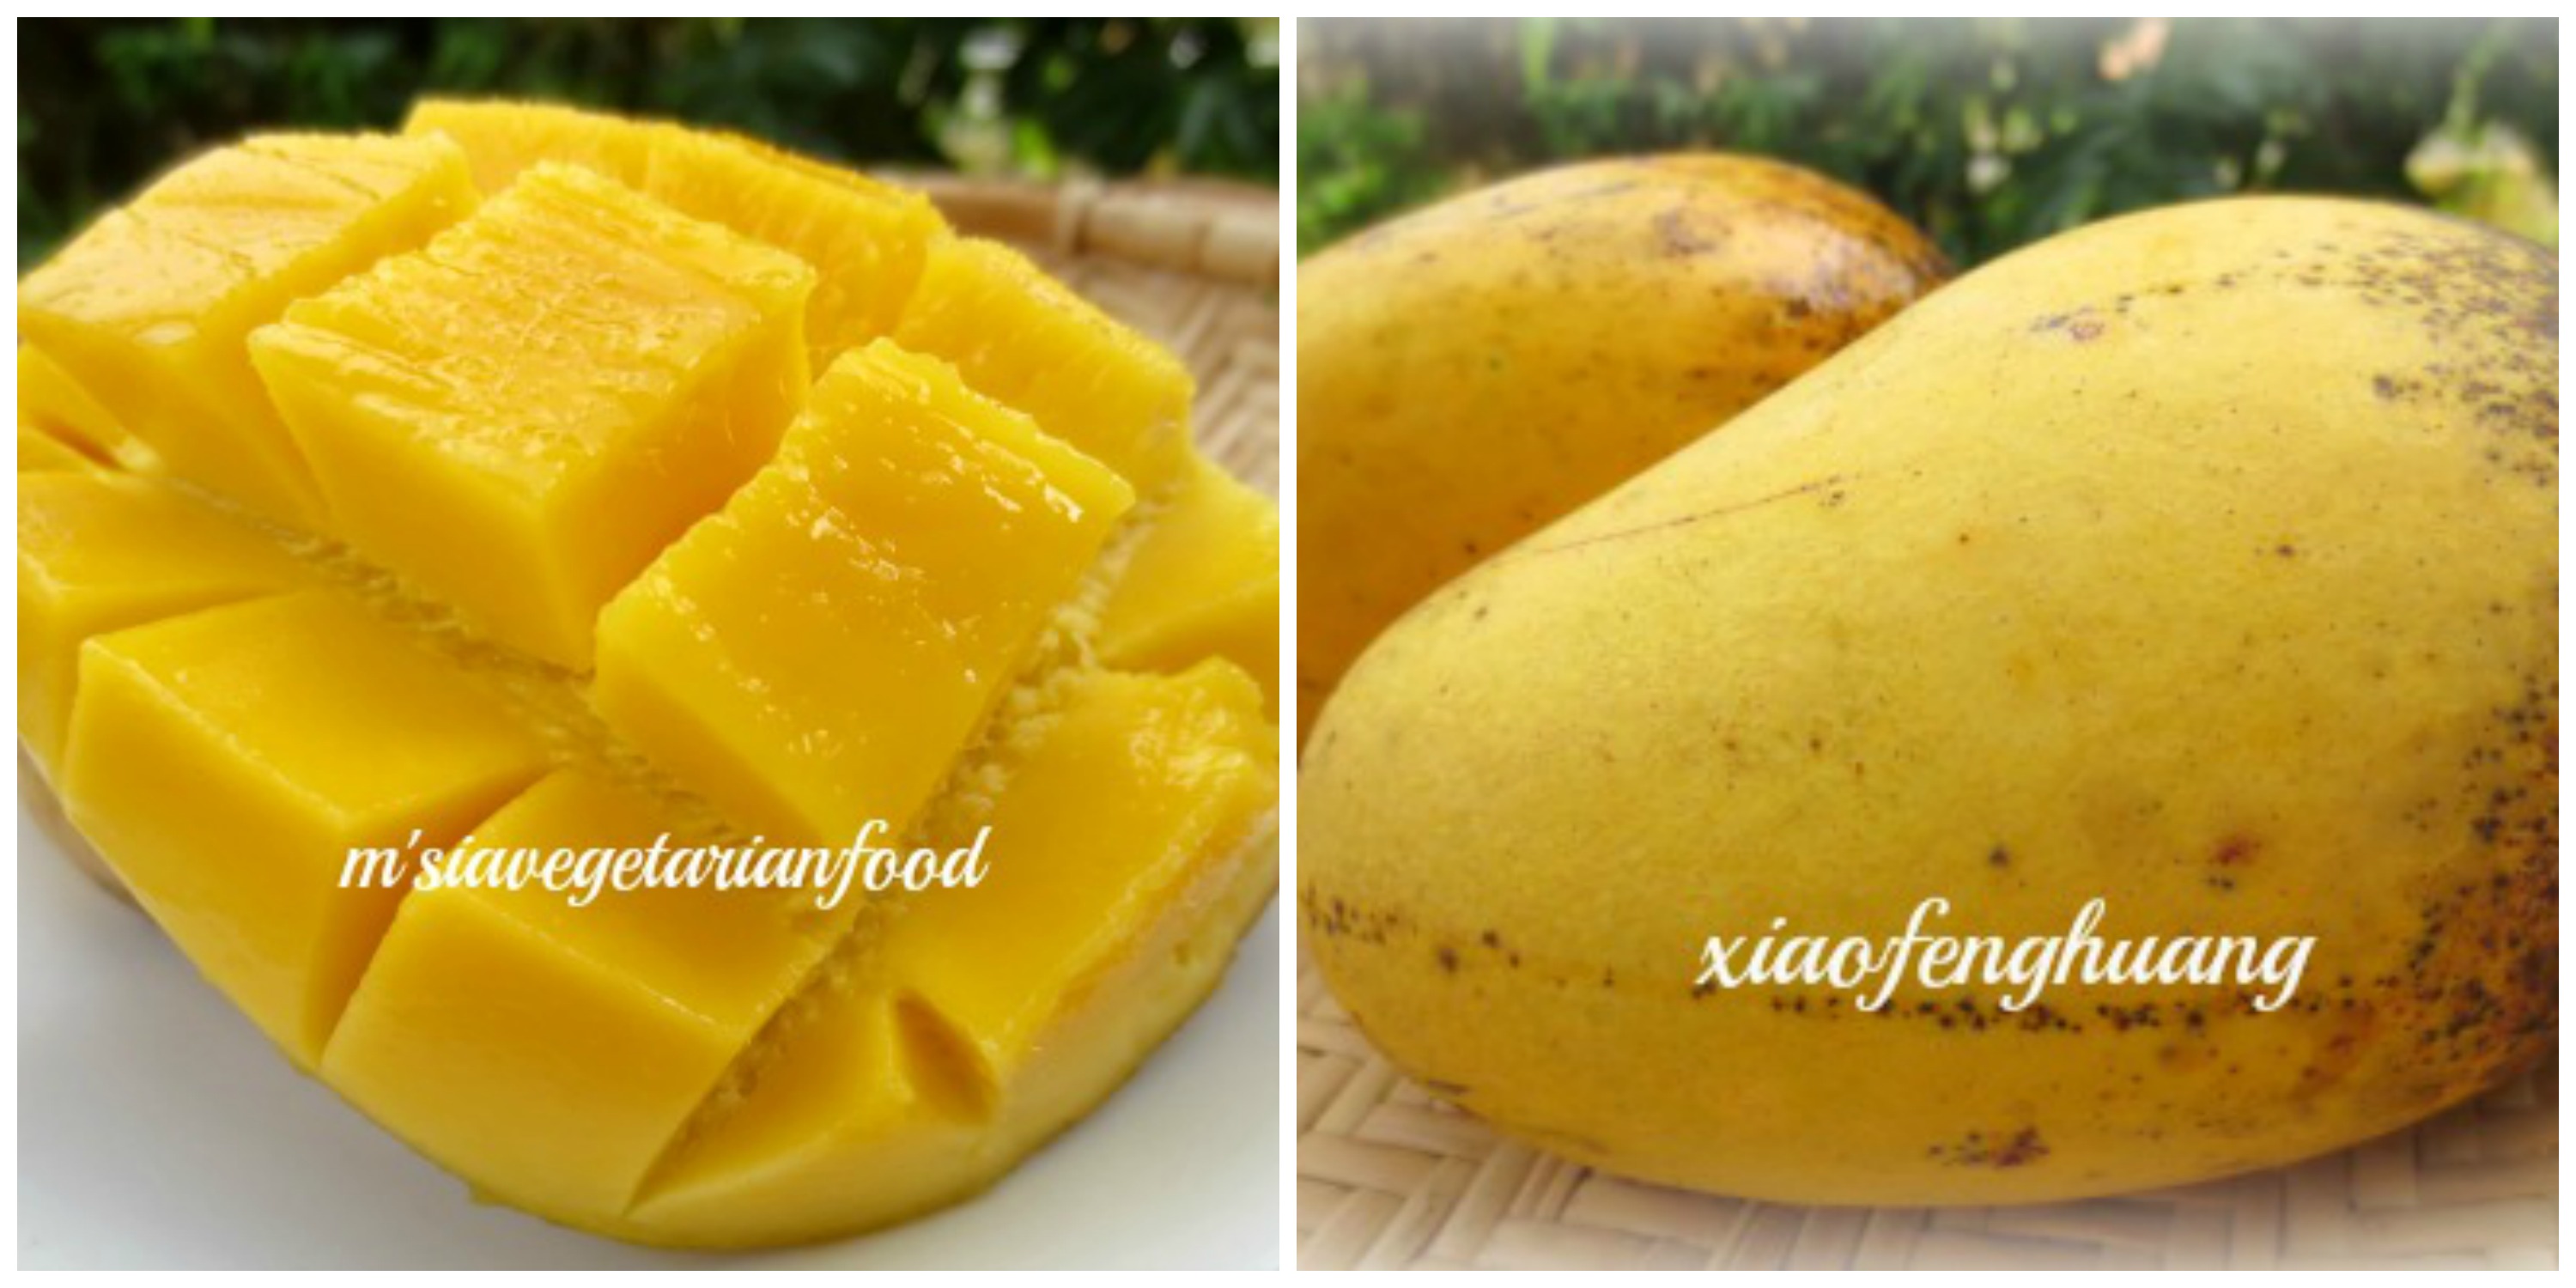 Home grown mangoes